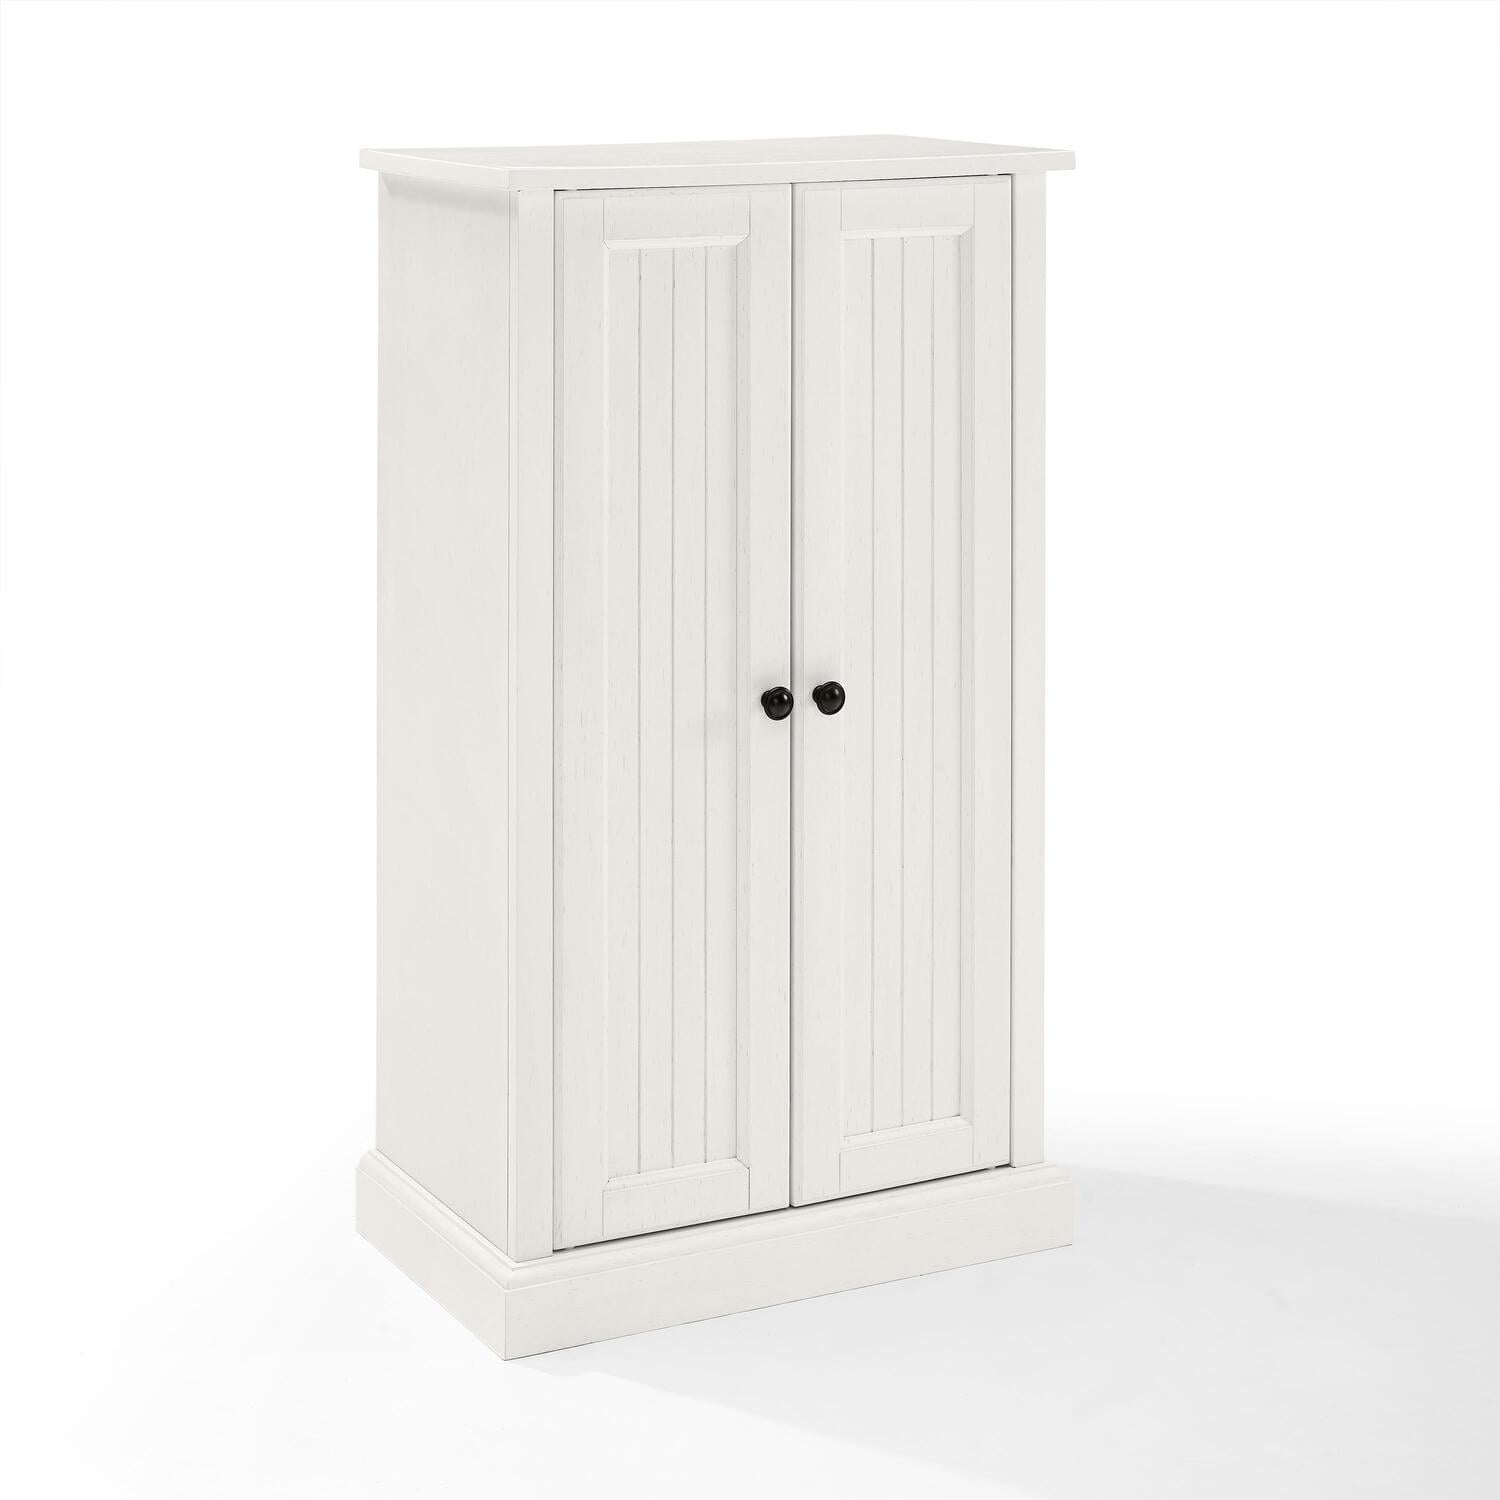 Topeakmart Bathroom Floor Storage Cabinet with Single Door and Adjustable Shelf White Finish Wood